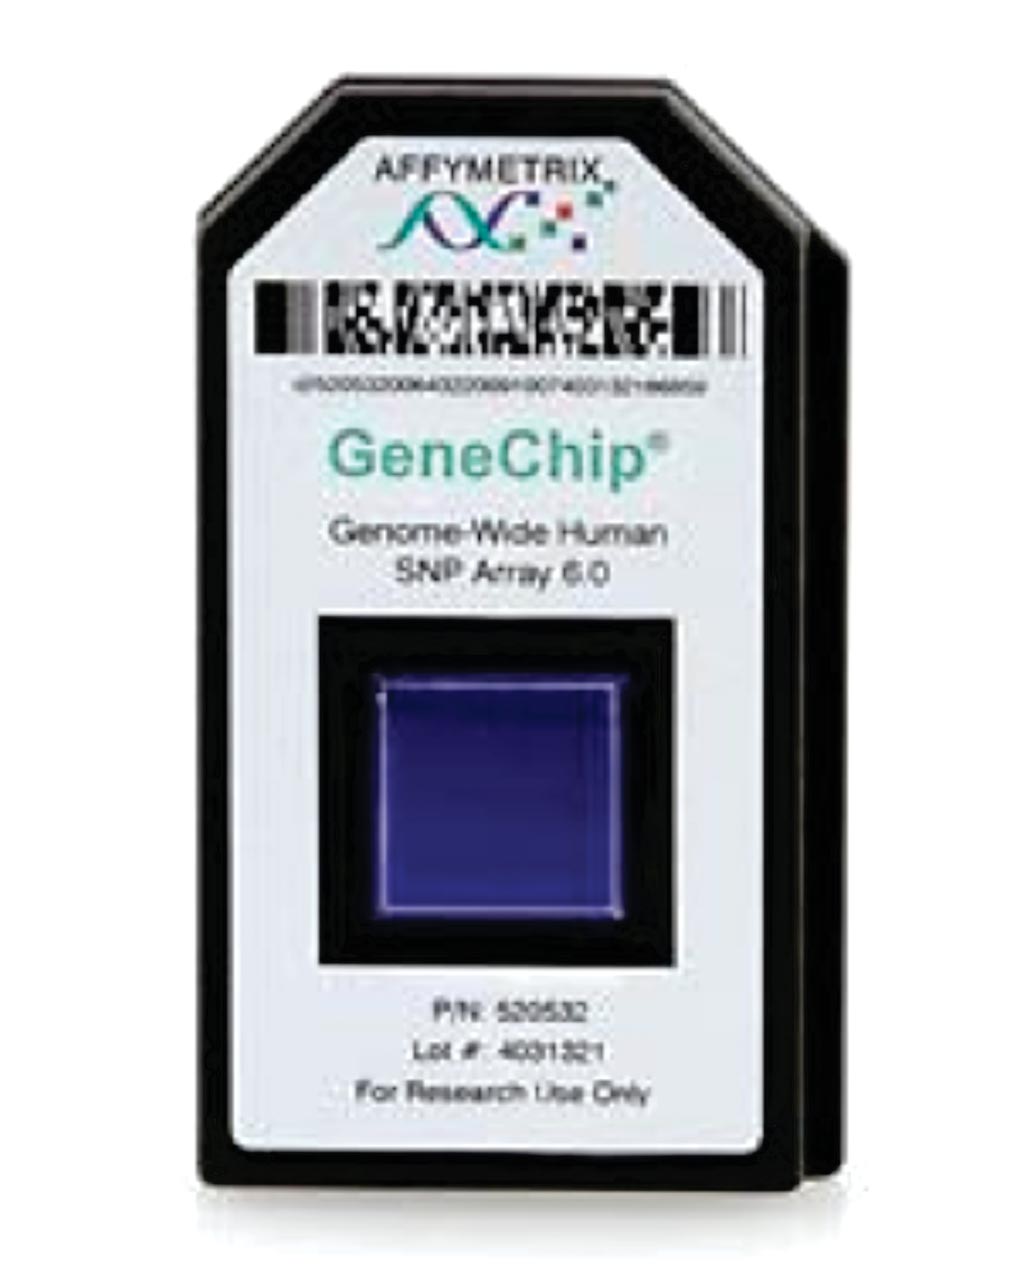 Image: Genome-wide human SNP array 6.0 GeneChip (Photo courtesy of Affymetrix).